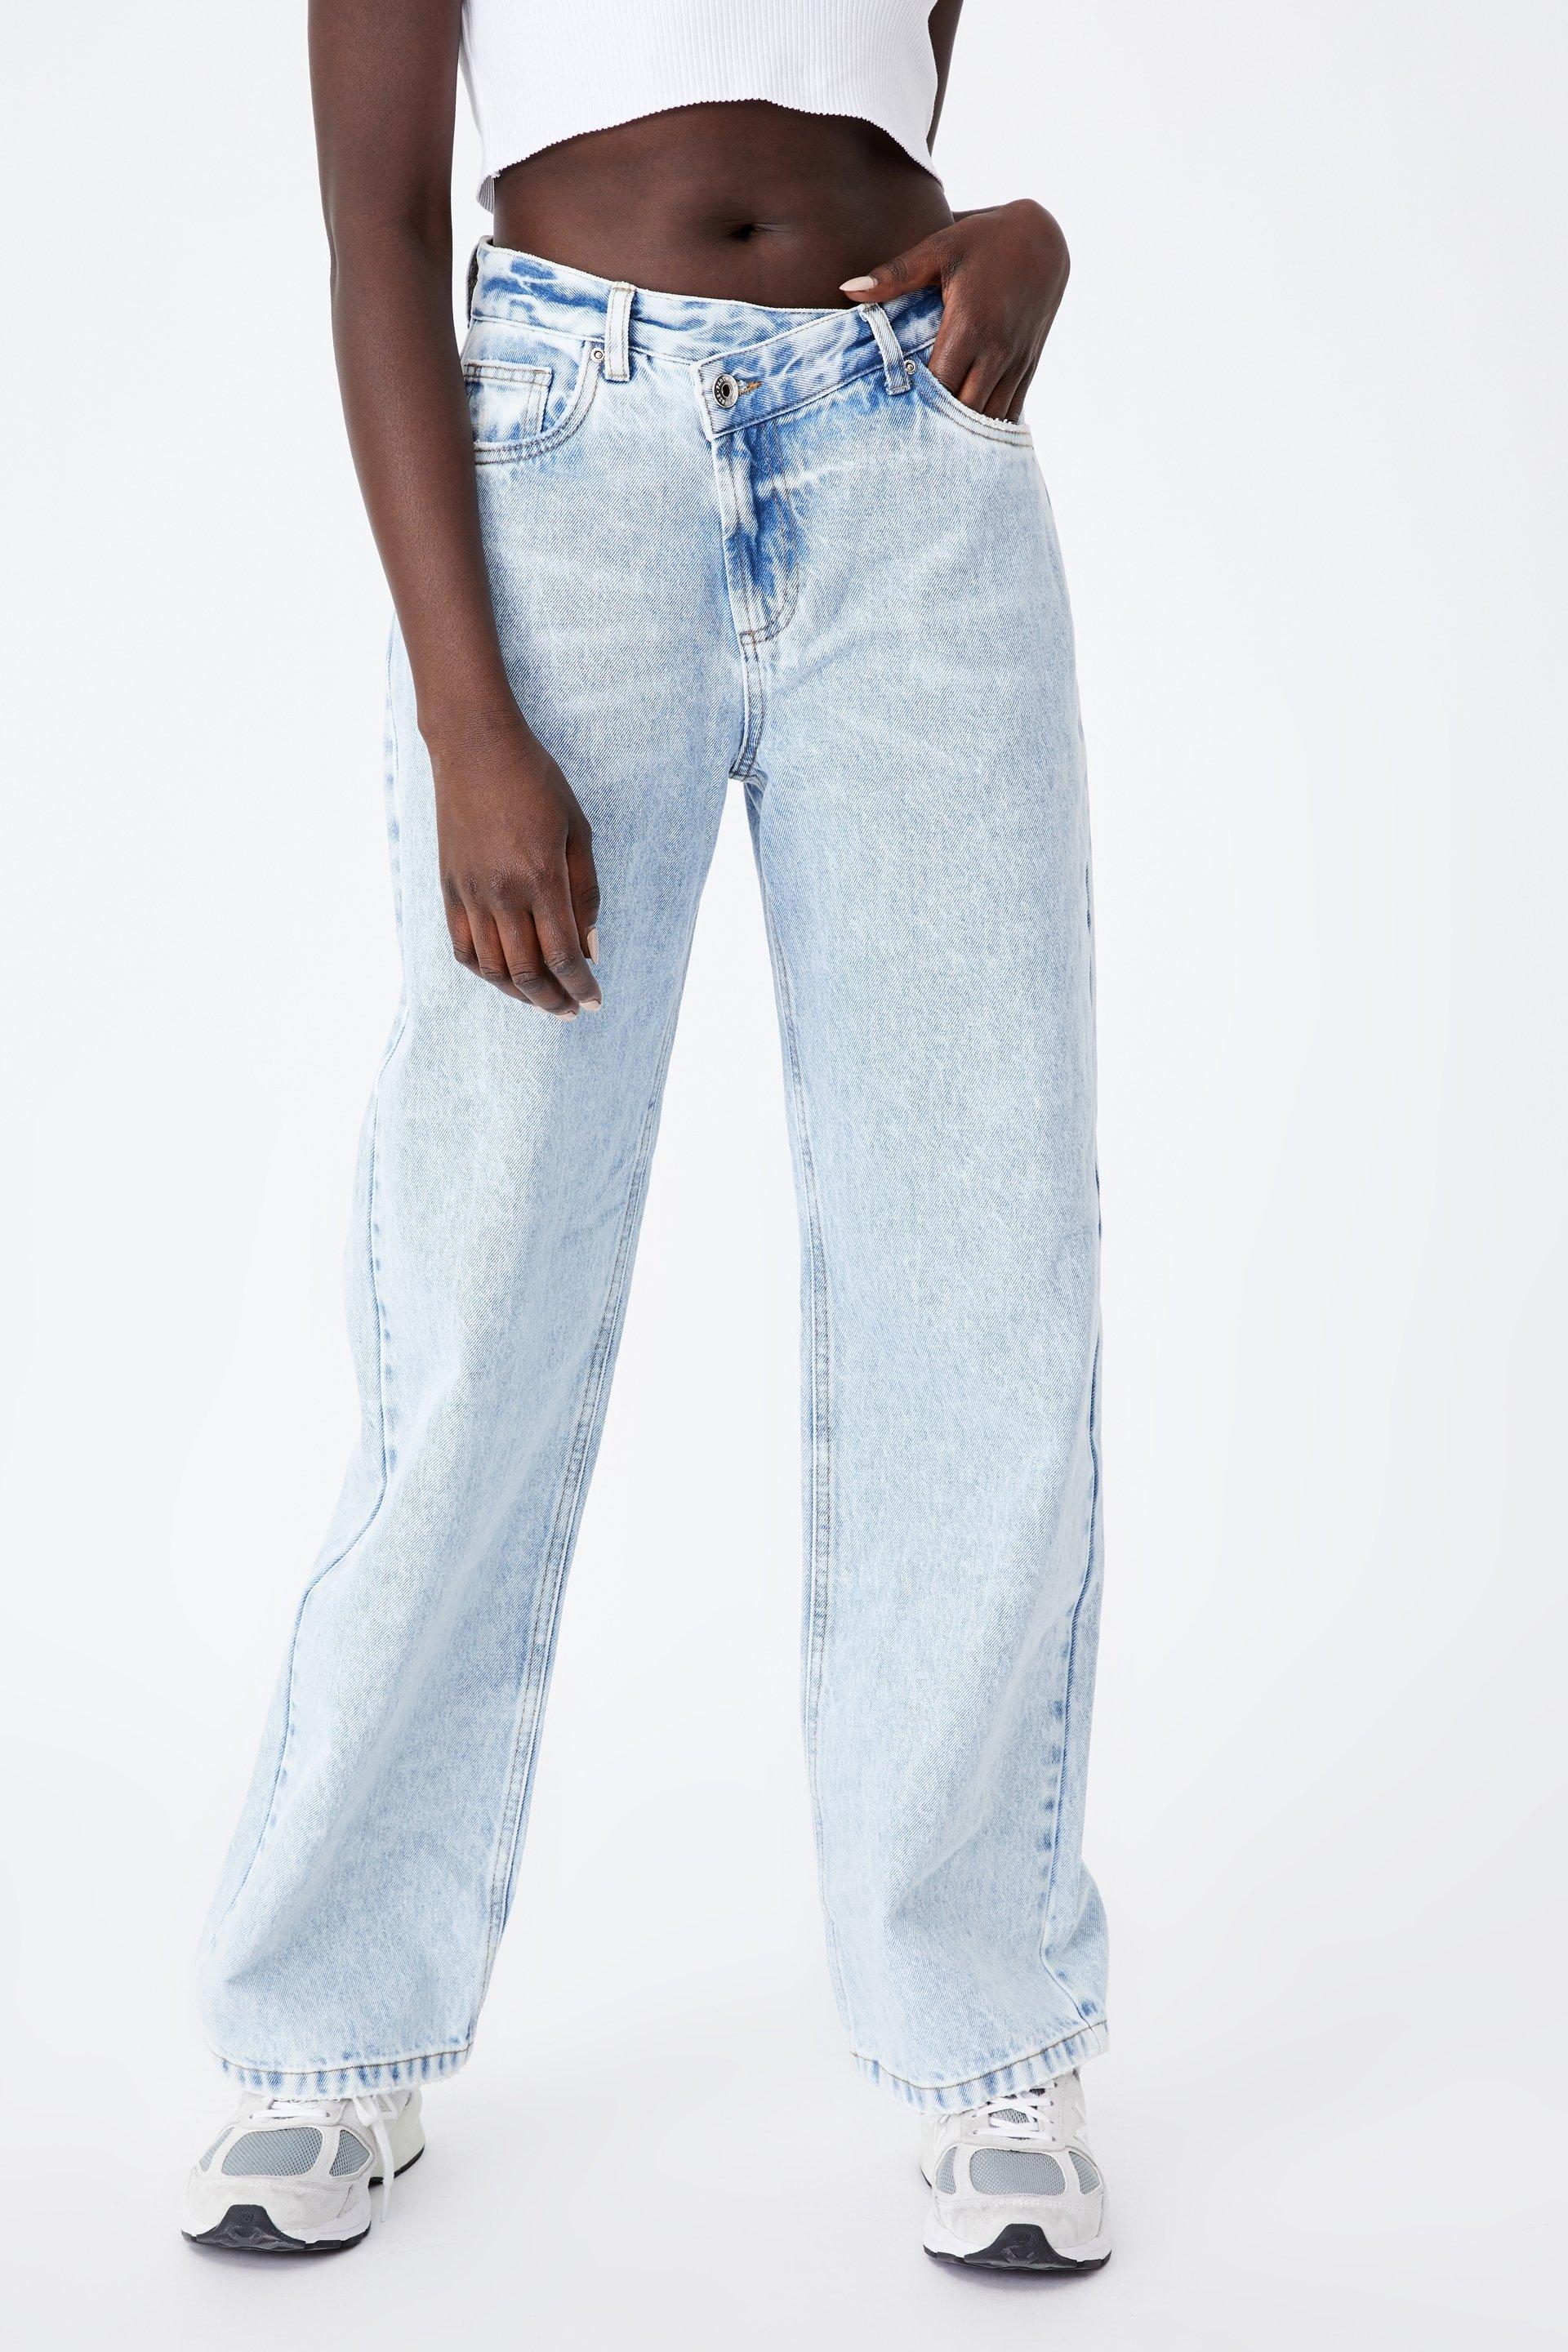 Asymetrical waist jean - whitehaven Factorie Jeans | Superbalist.com